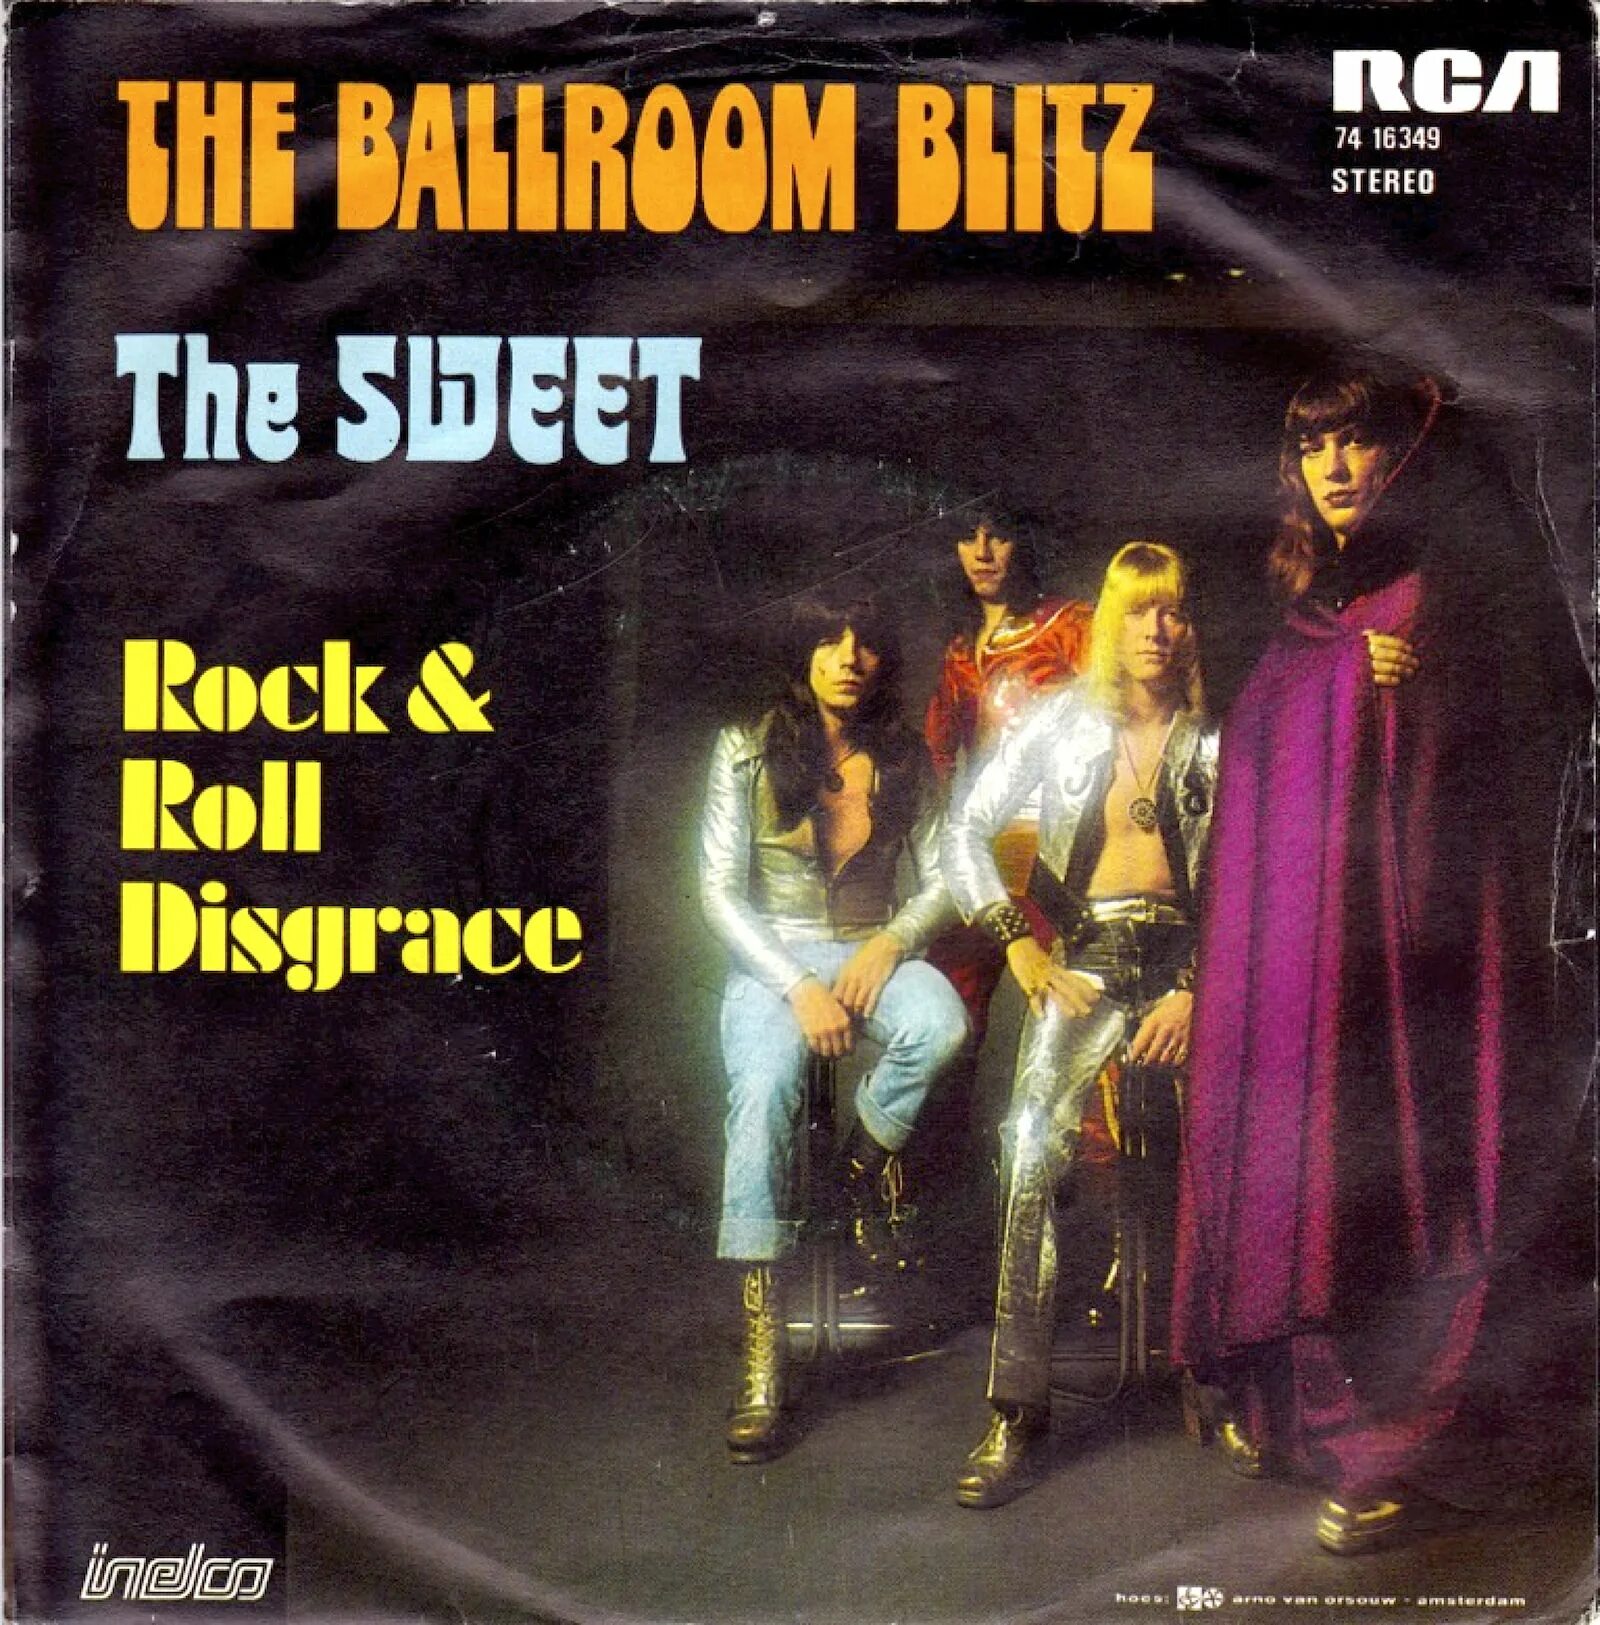 Sweet ballroom blitz. The Sweet - the Ballroom Blitz (1973). The Sweet - the Ballroom Blitz (1974). The Ballroom Blitz Sweet. Sweet Ballroom Blitz винил.